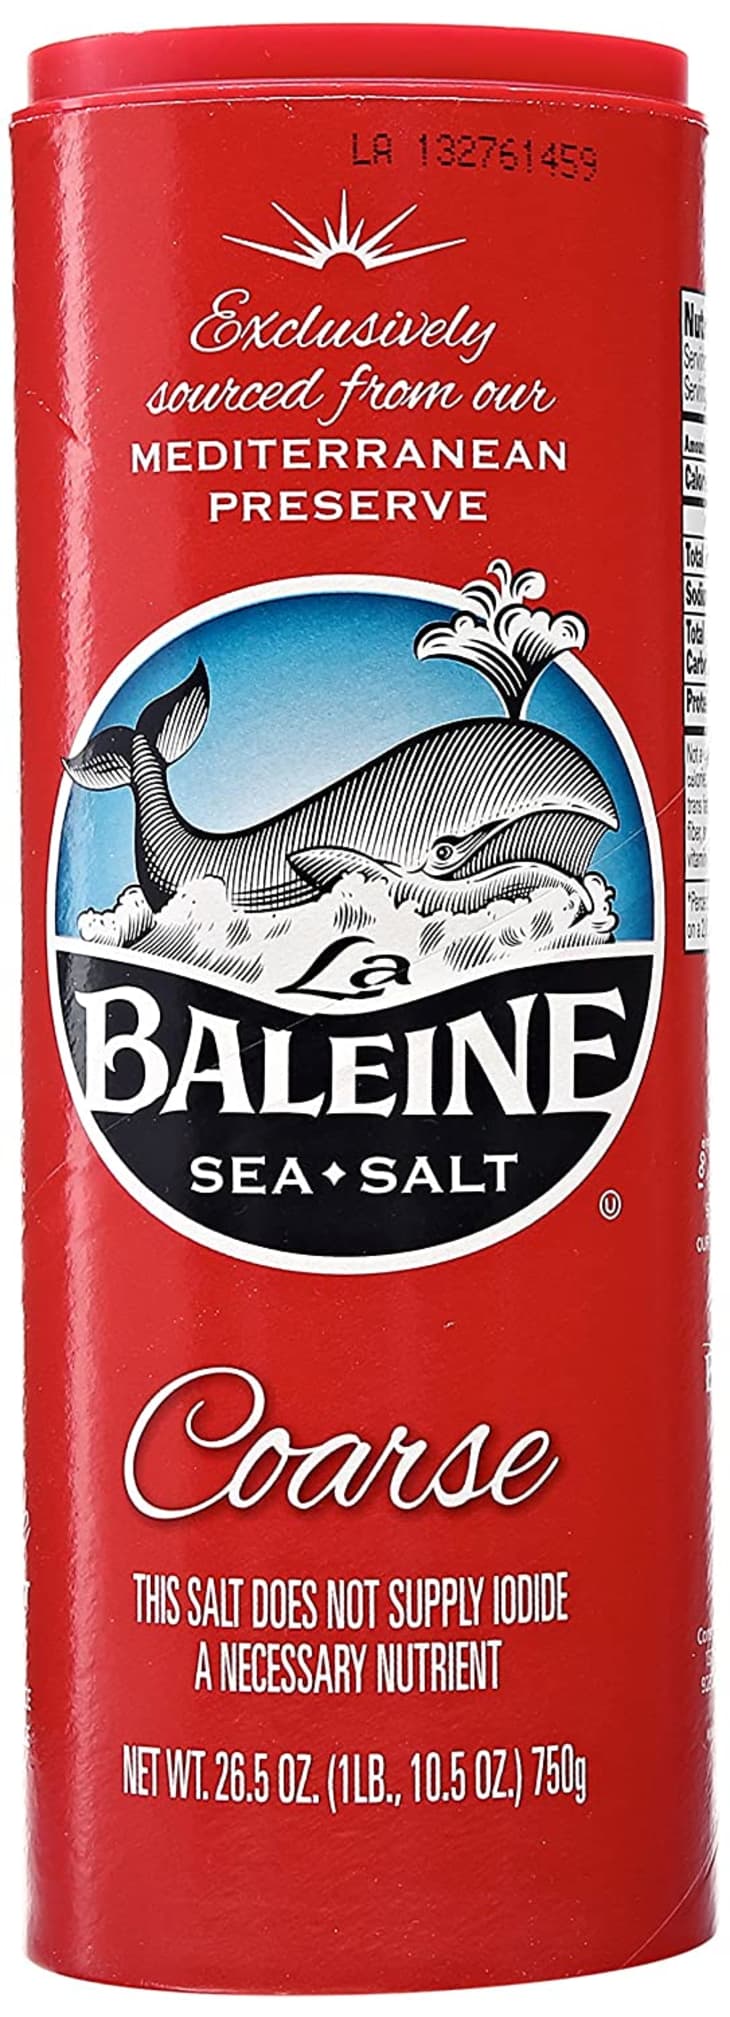 La Baleine Coarse Sea Salt at Amazon